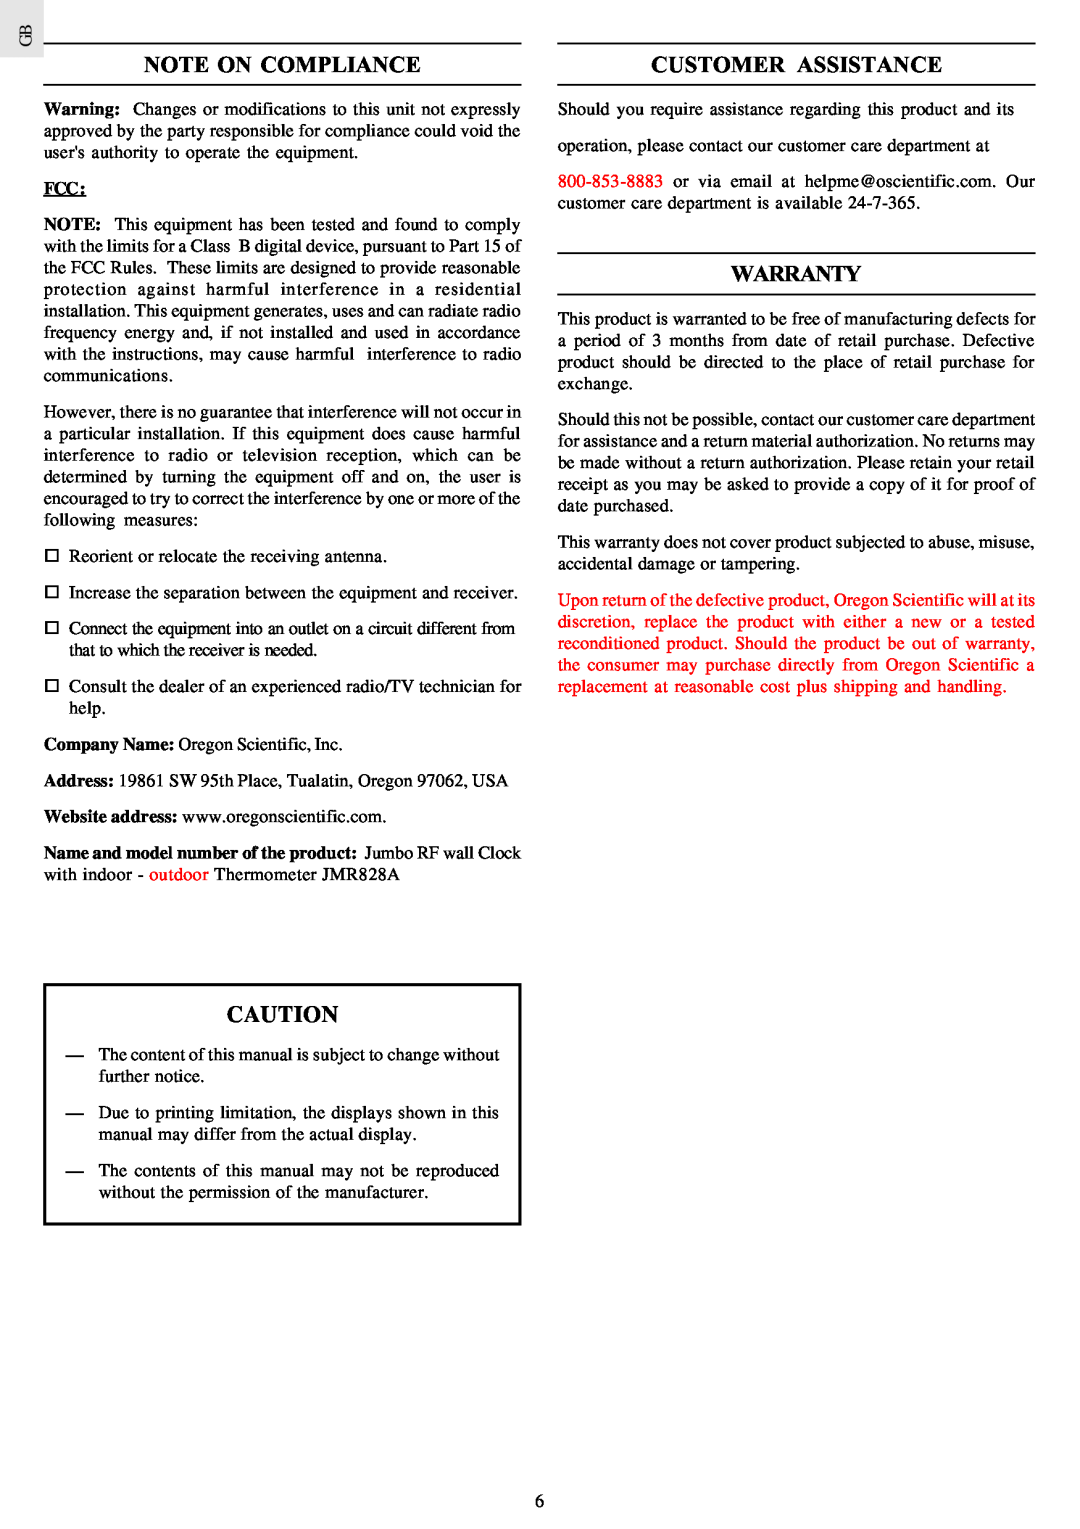 Oregon Scientific JMR828A instruction manual Note On Compliance, Customer Assistance, Warranty 